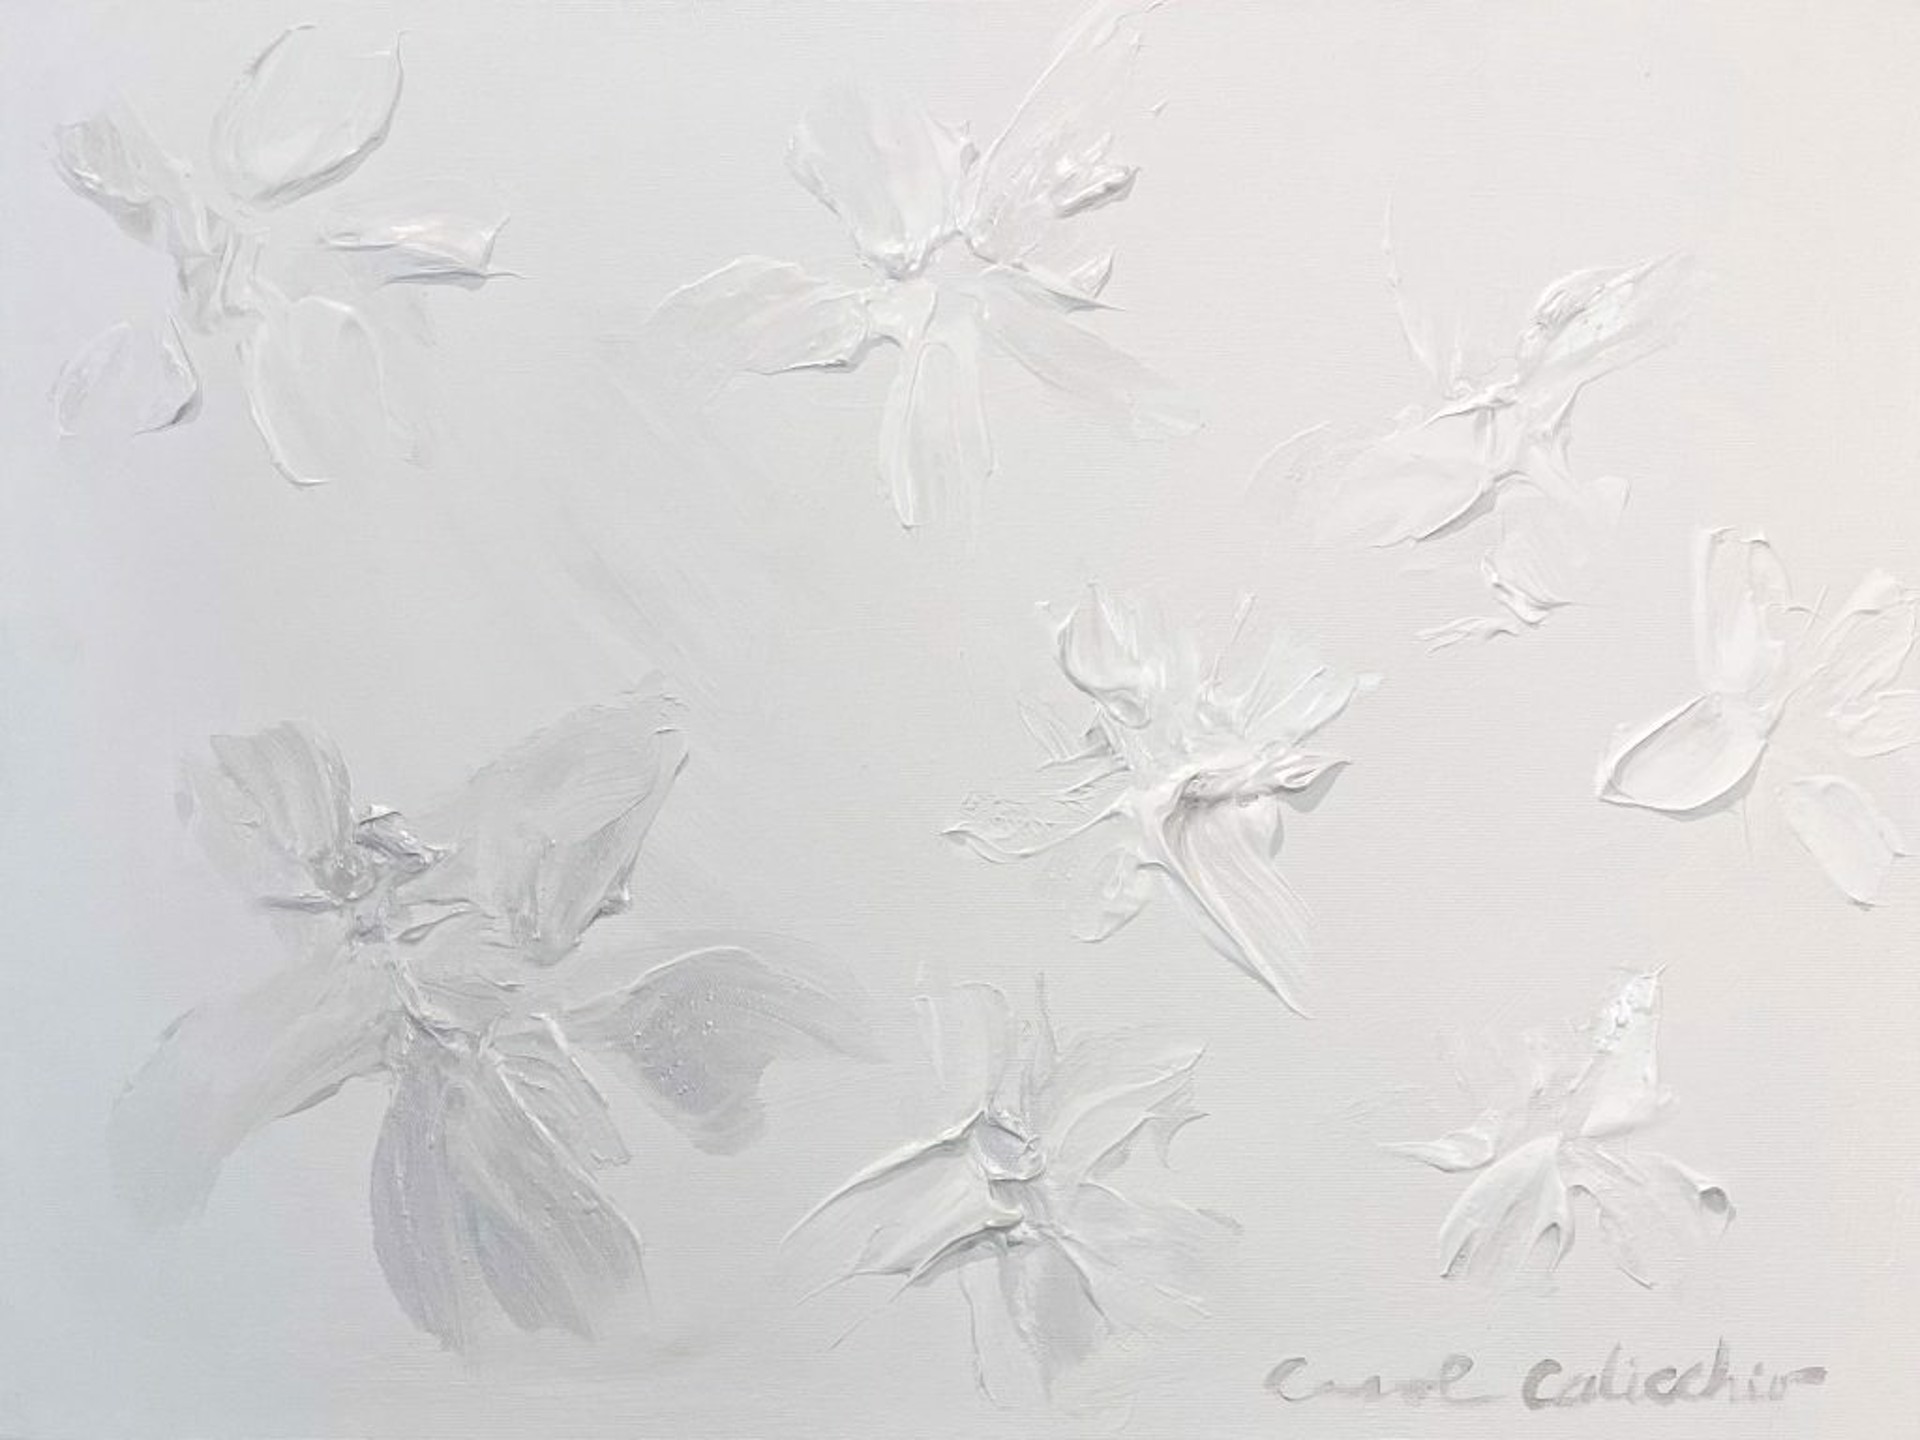 Gardenia Twilight by Carol Calicchio